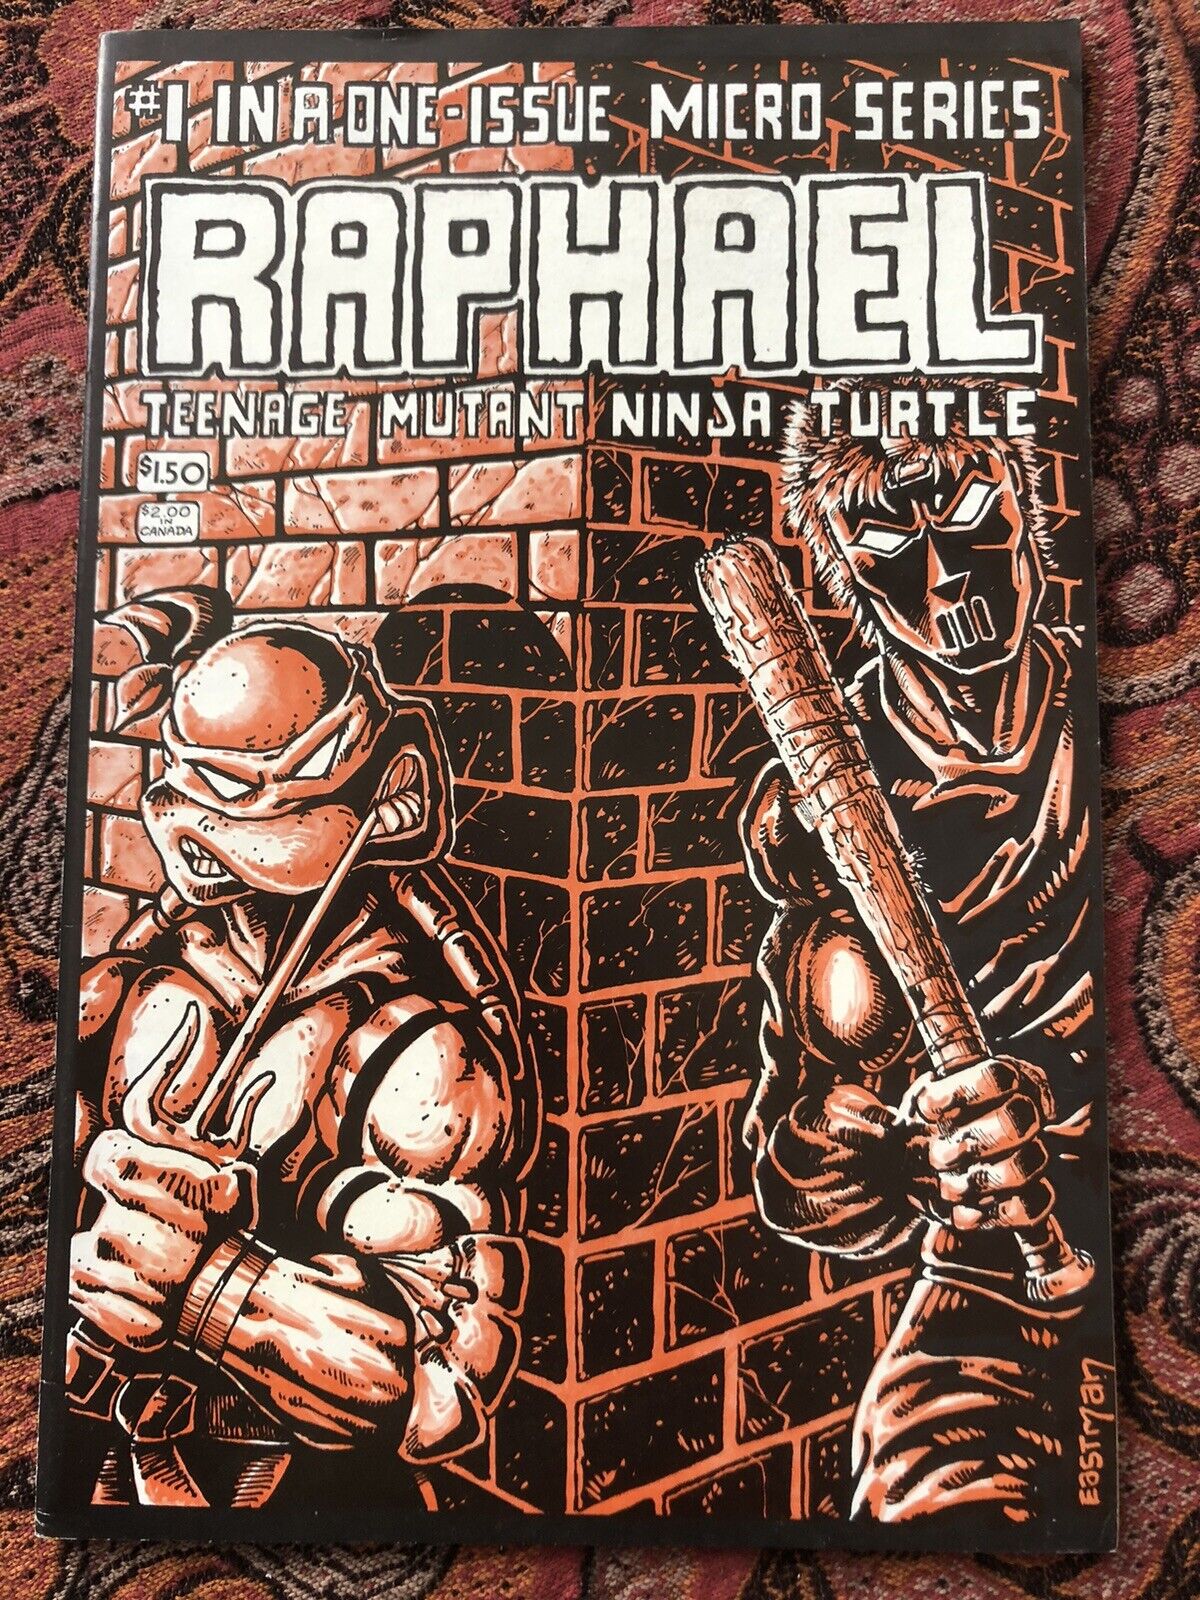 Raphael # 1 Solo One-Shot 1985 Teenage Mutant Ninja Turtle 